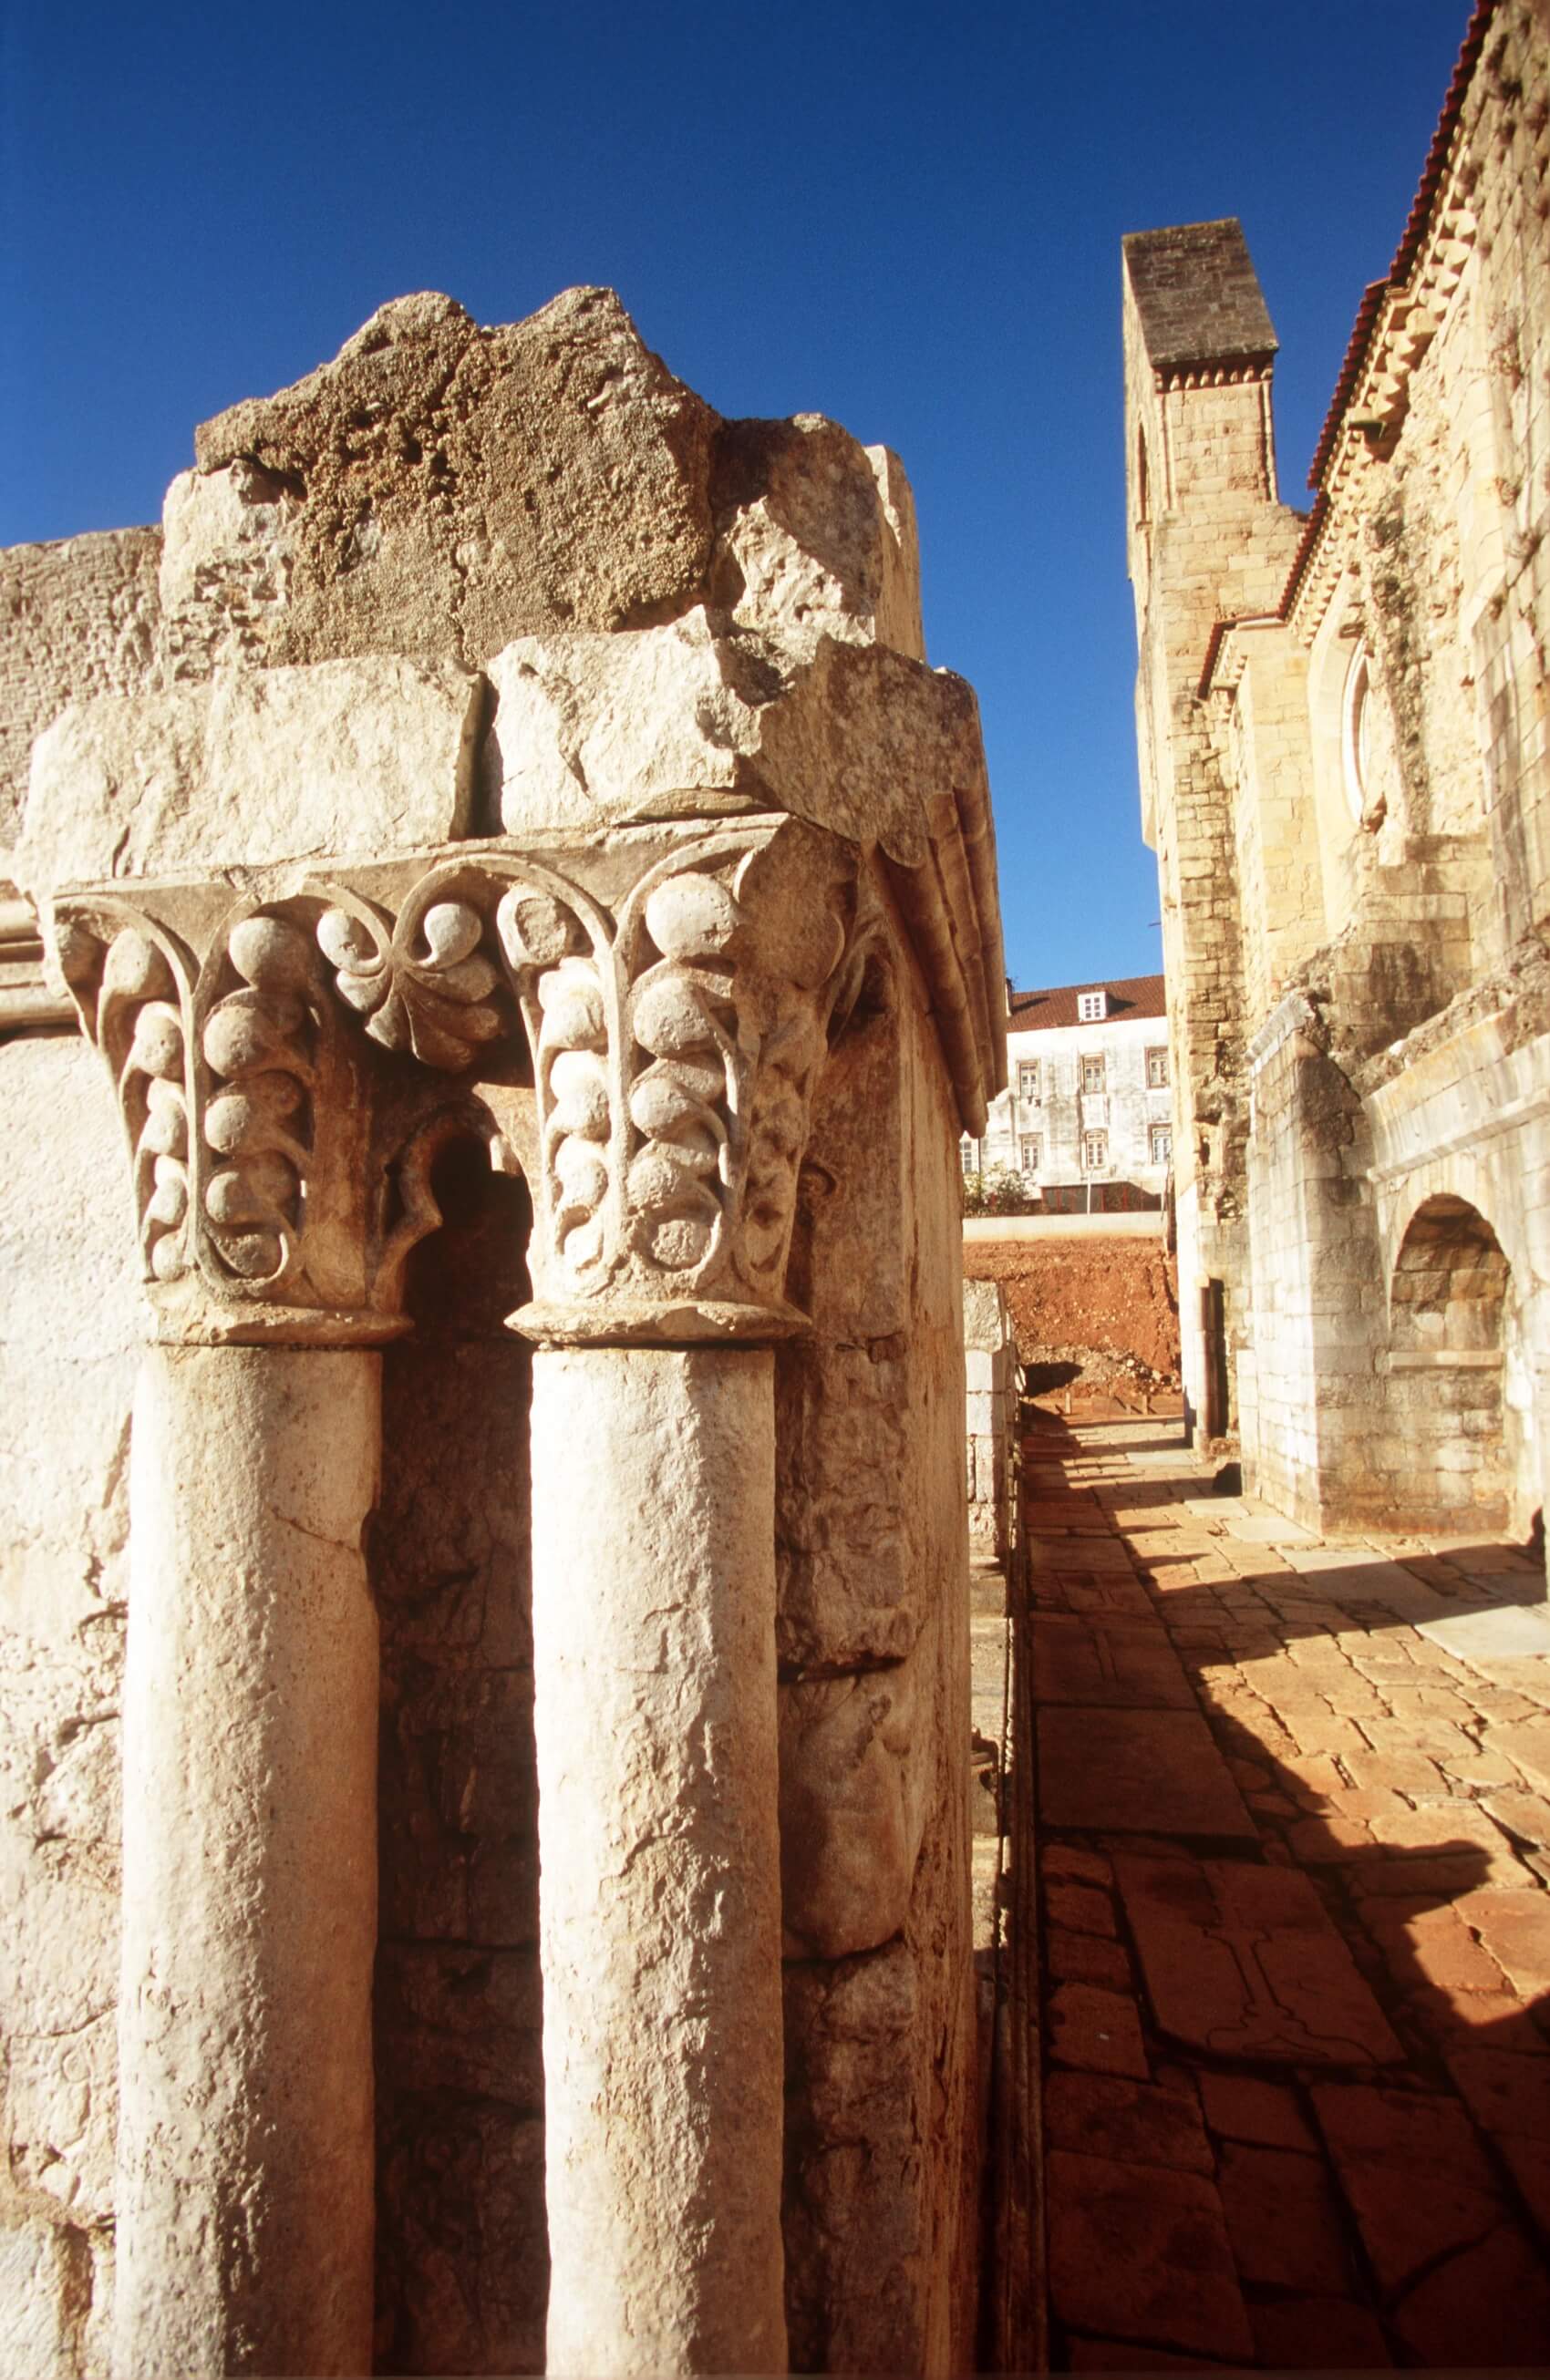 Turismo Centro de Portugal - Coimbra Historical City Tour monastery pilar 